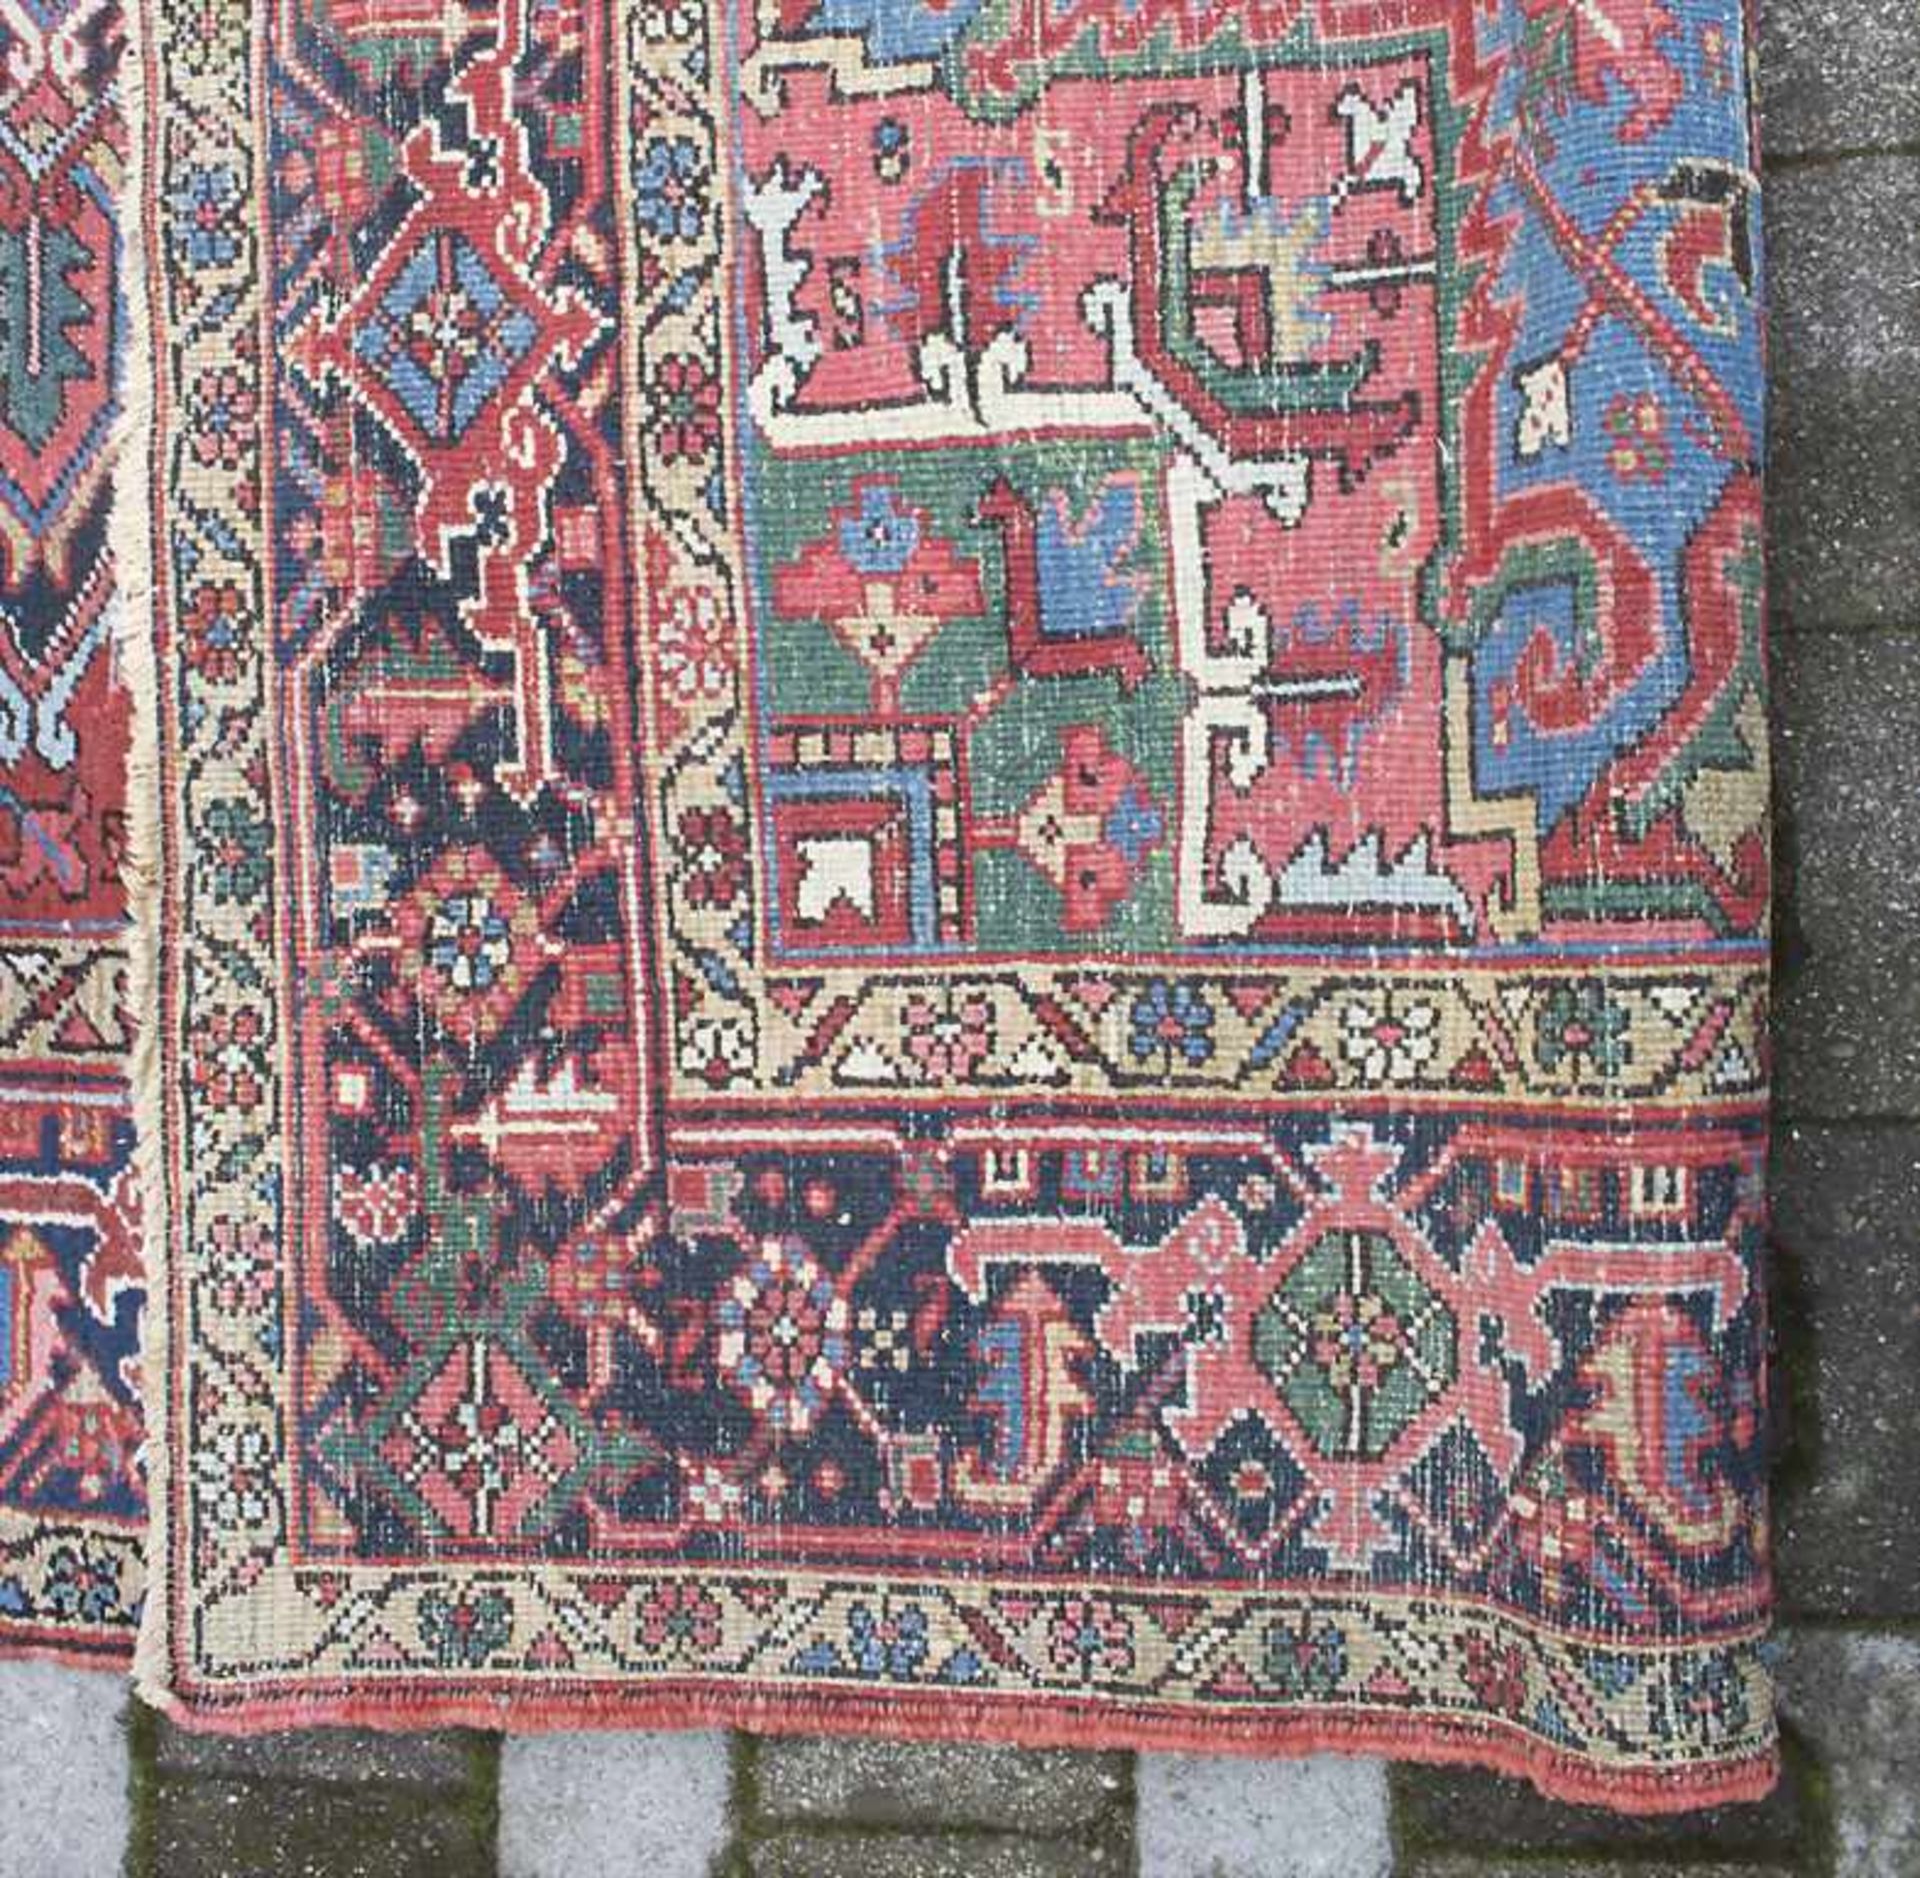 Orientteppich 'Heriz' / An oriental carpet 'Heriz'Material: Wolle, Maße: 330 x 220 cm, Zustand: gut, - Bild 4 aus 4